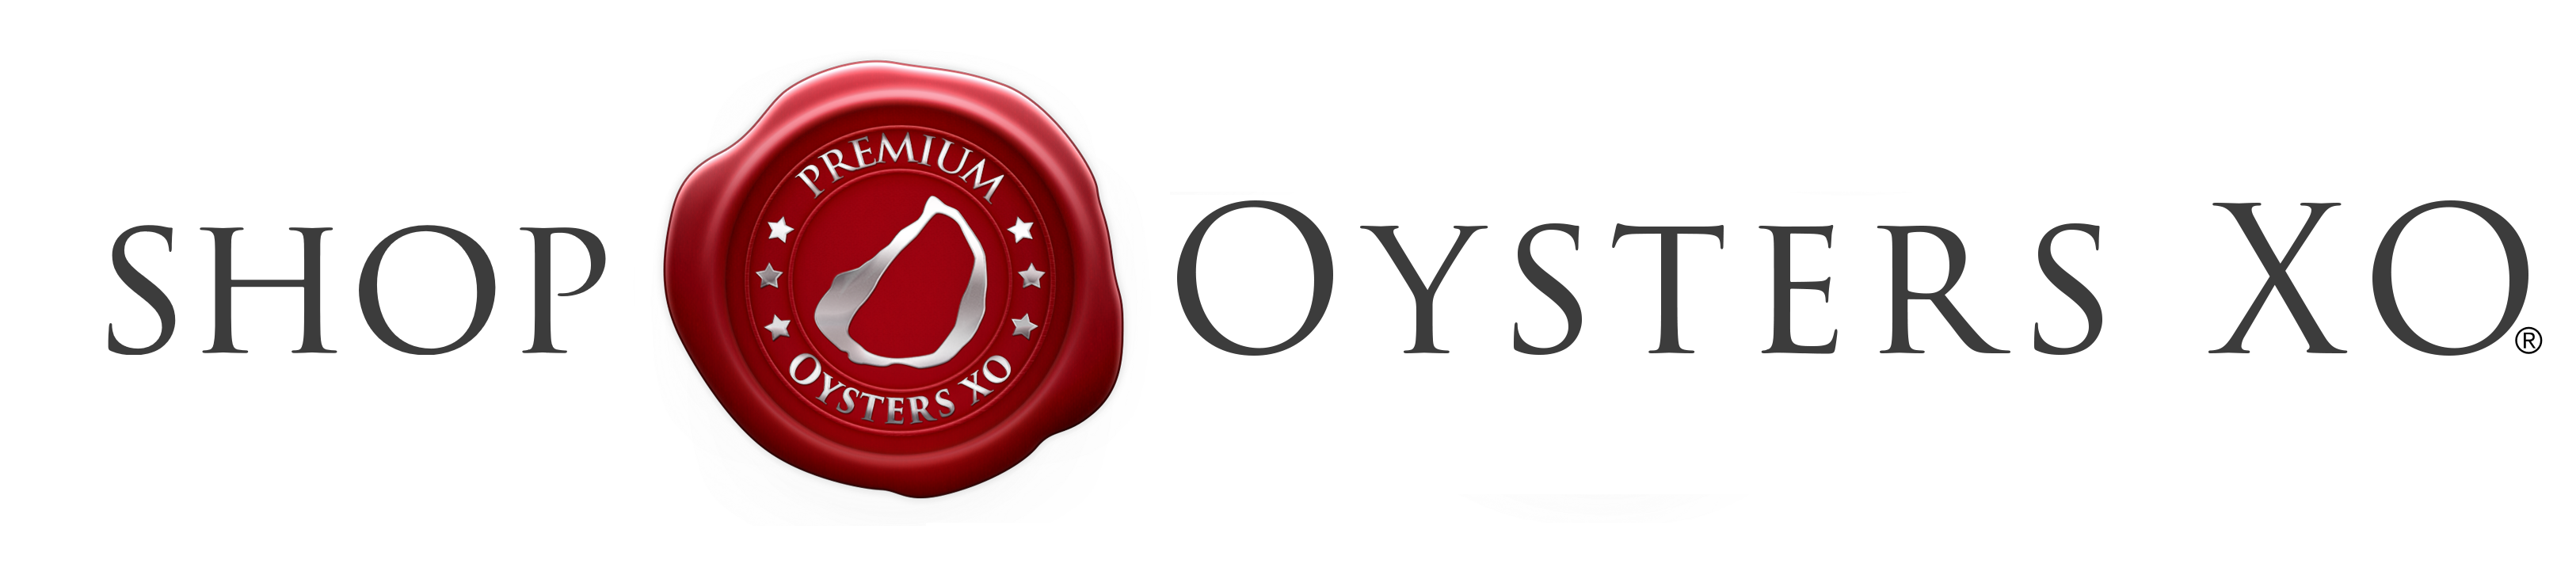 SHOP Oysters XO logo and seal v4 dec 2020 horizontal – transparent BG (1)